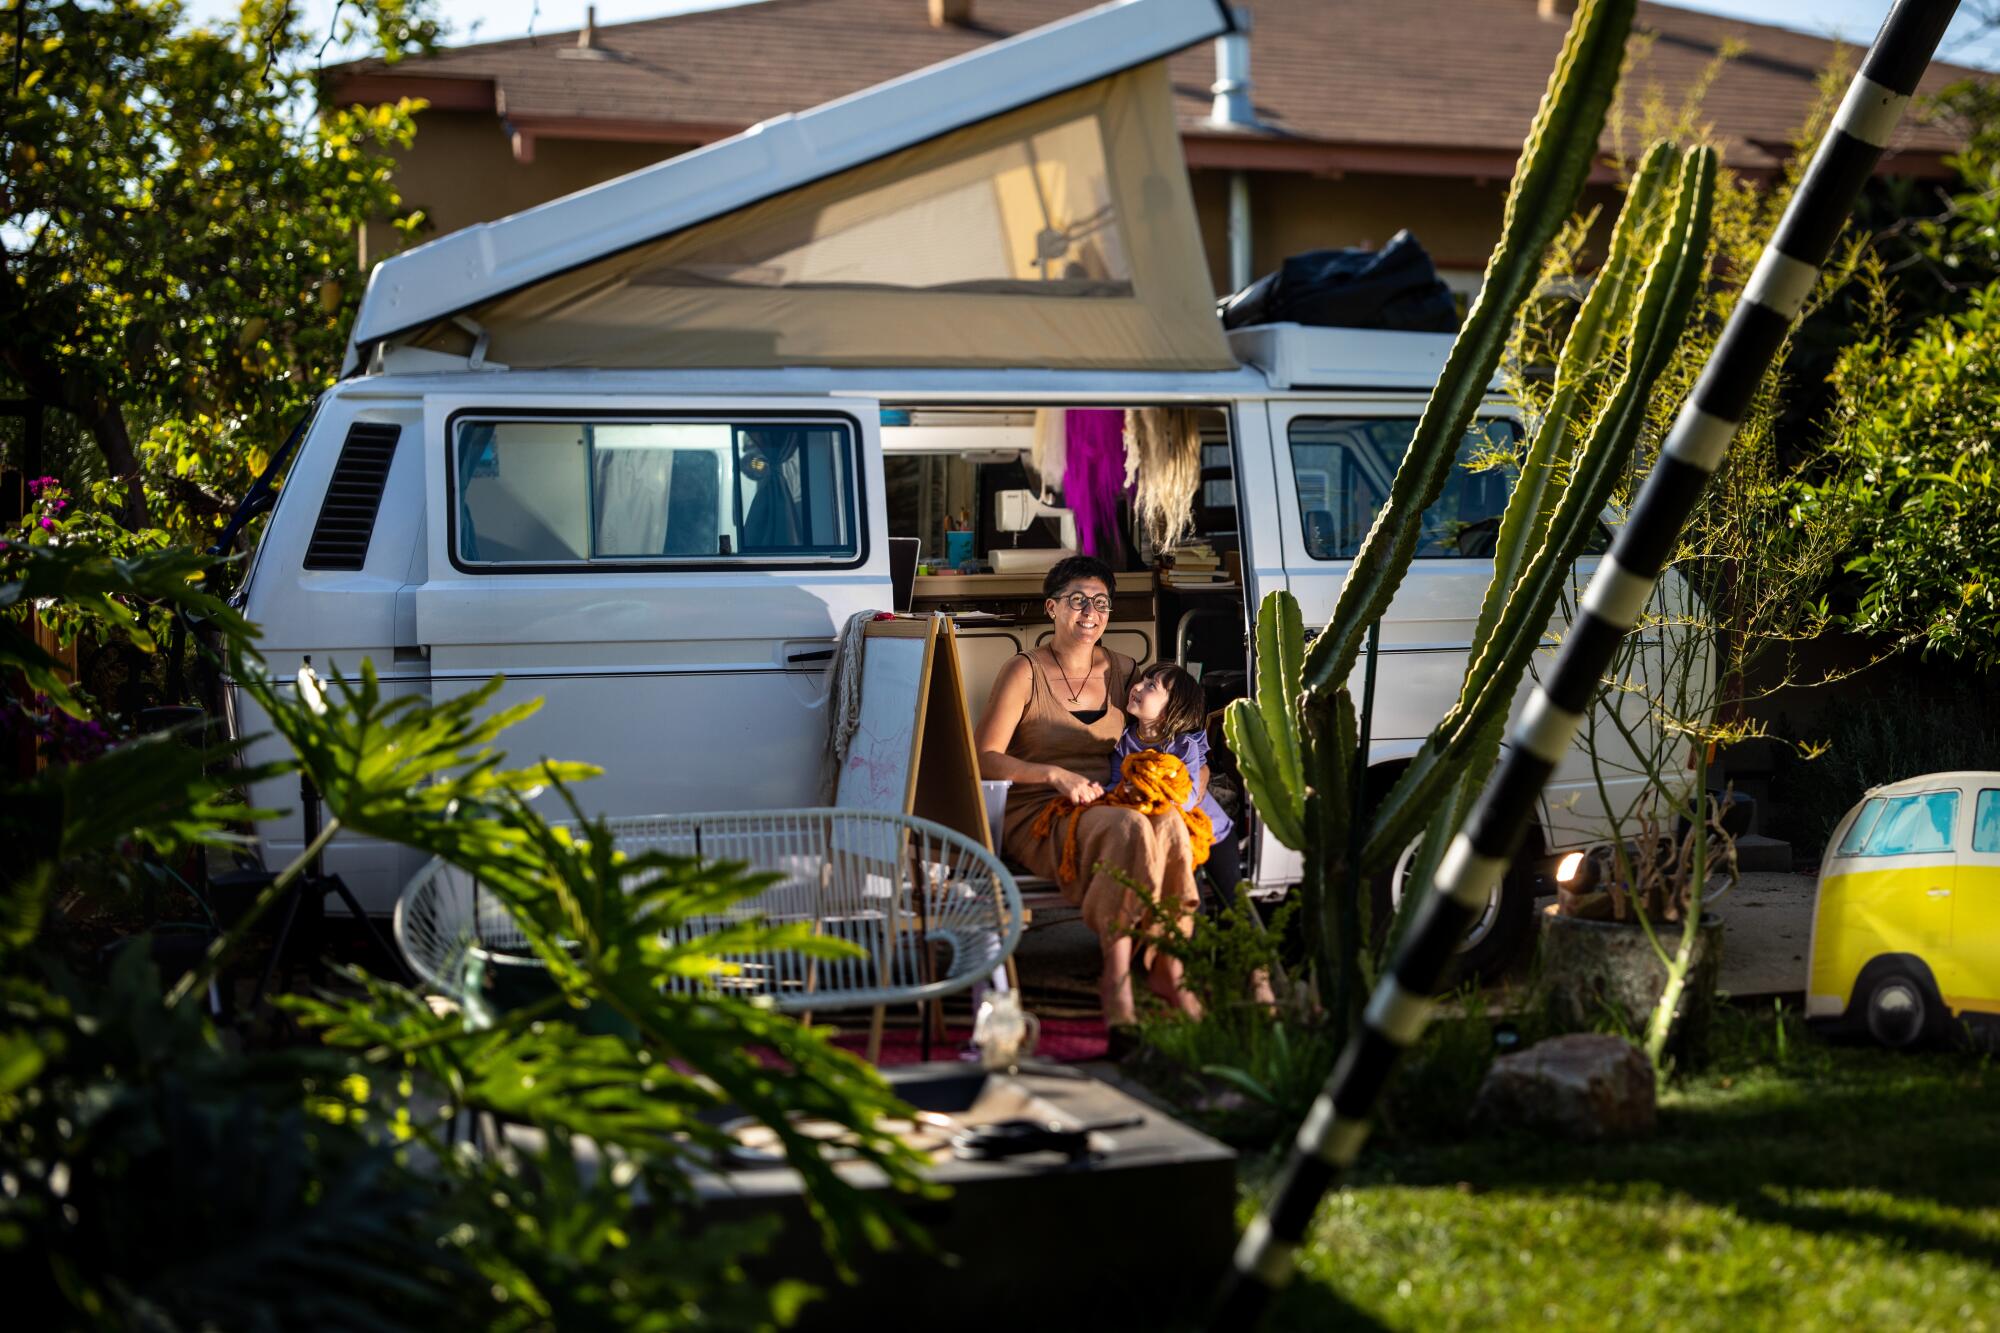 Artist Tanya Aguiñiga has been working out of a Volkswagen camper in her yard since coronavirus struck